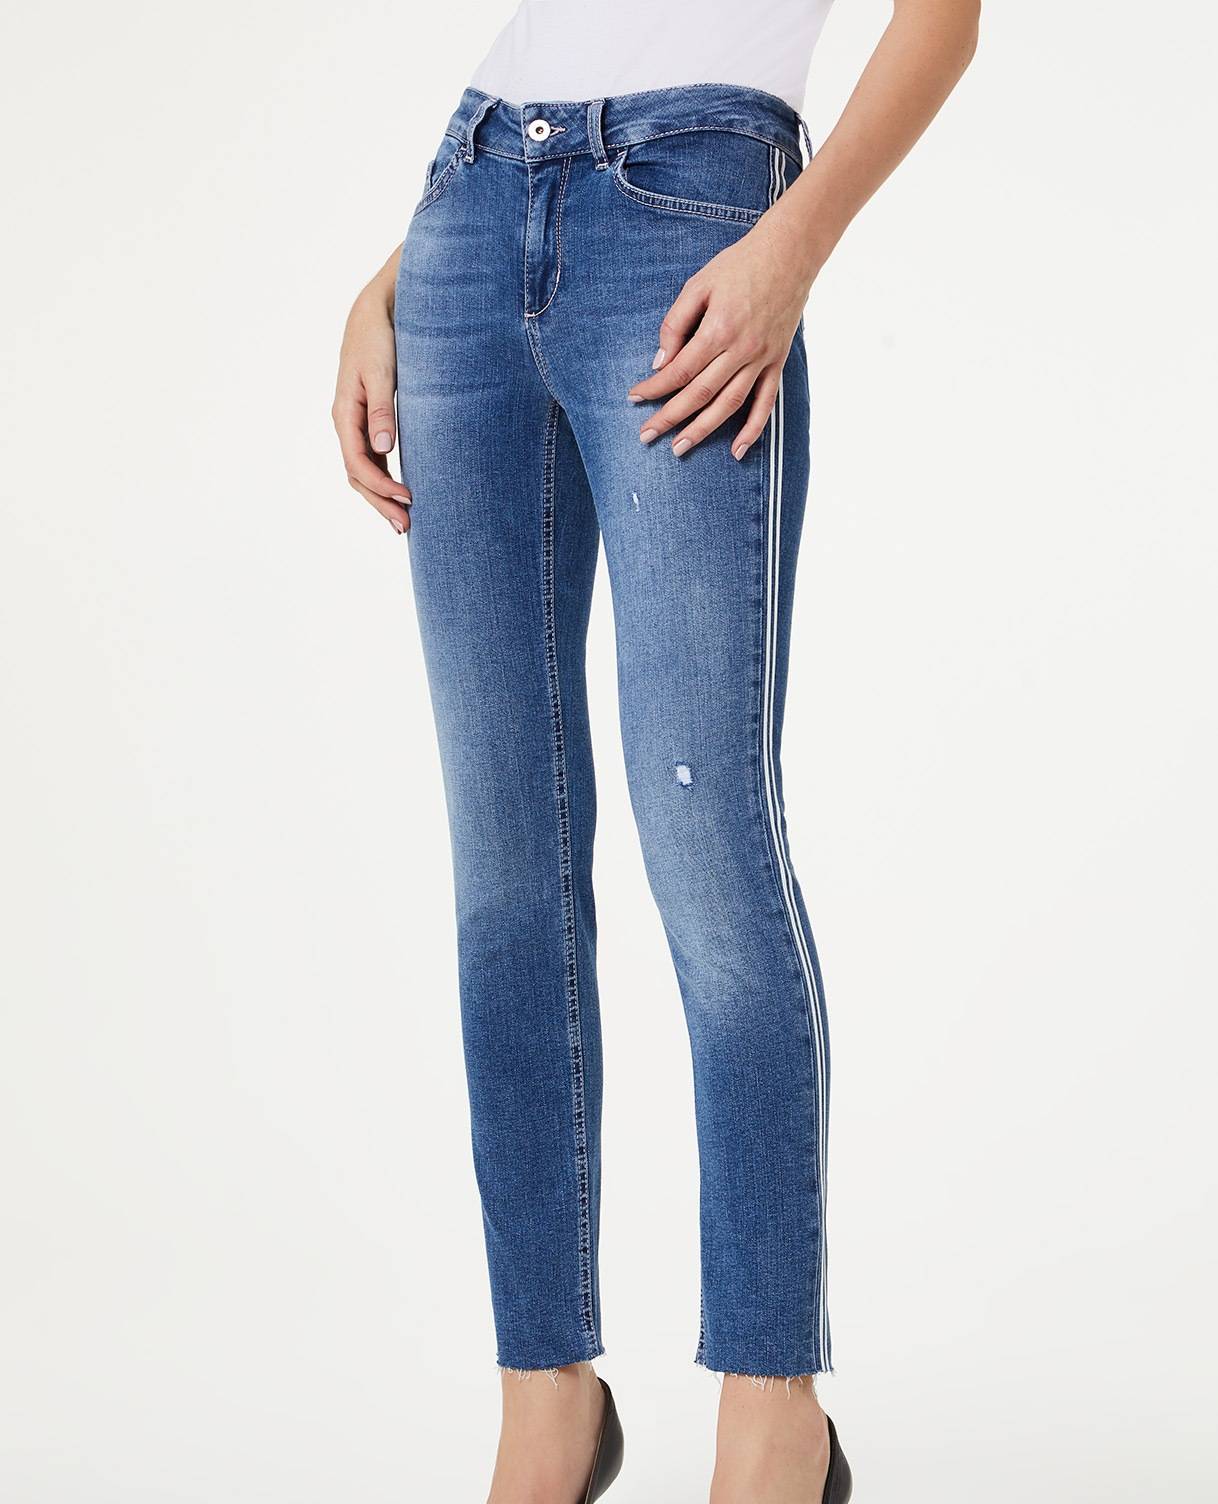 https://www.charmeroma.com/wp-content/uploads/2022/12/jeans-liu-jo-skinny1-1.jpg